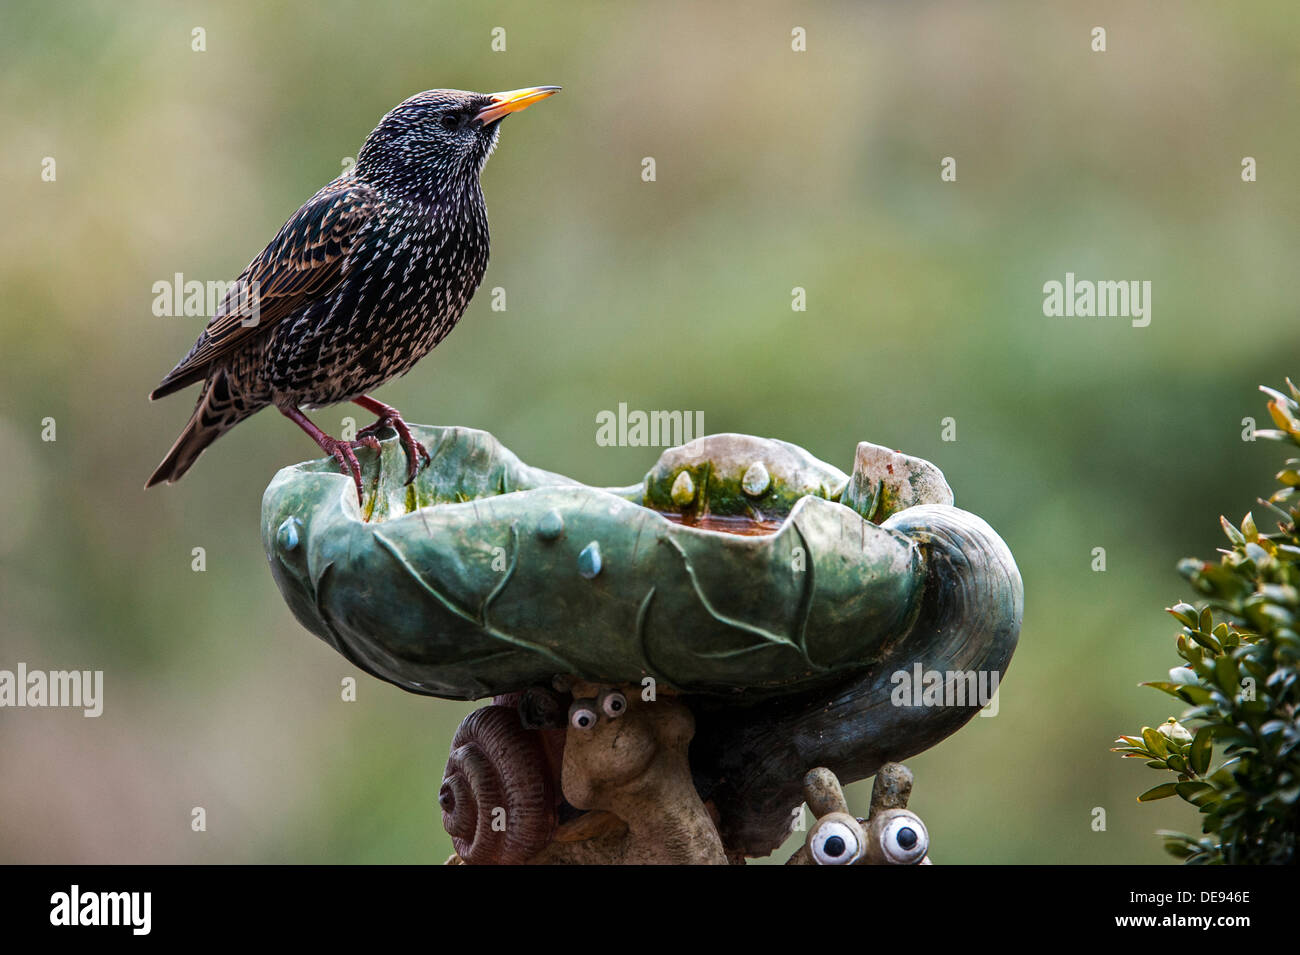 Common Starling / European starling (Sturnus vulgaris) drinking water from garden  bird bath / birdbath Stock Photo